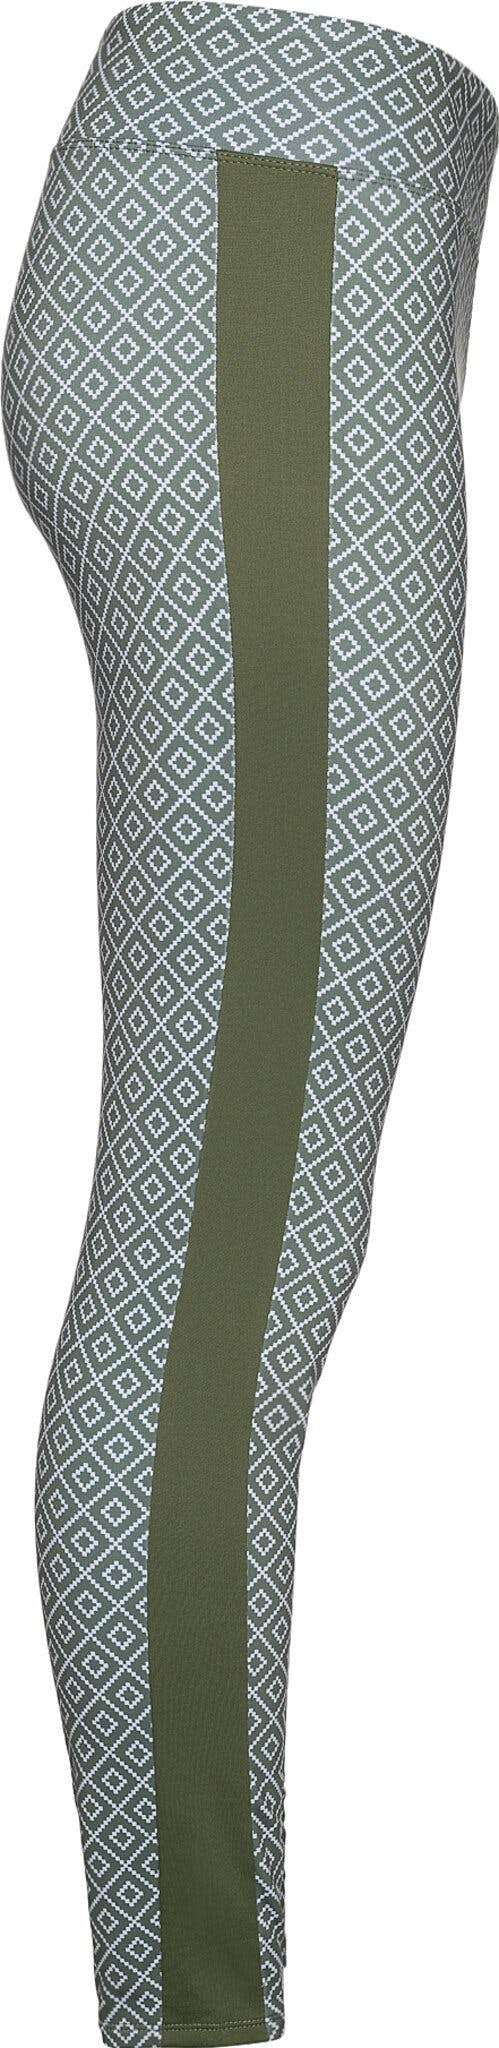 Product gallery image number 3 for product Meribel Elastic Waistband Printed Leggings - Women's